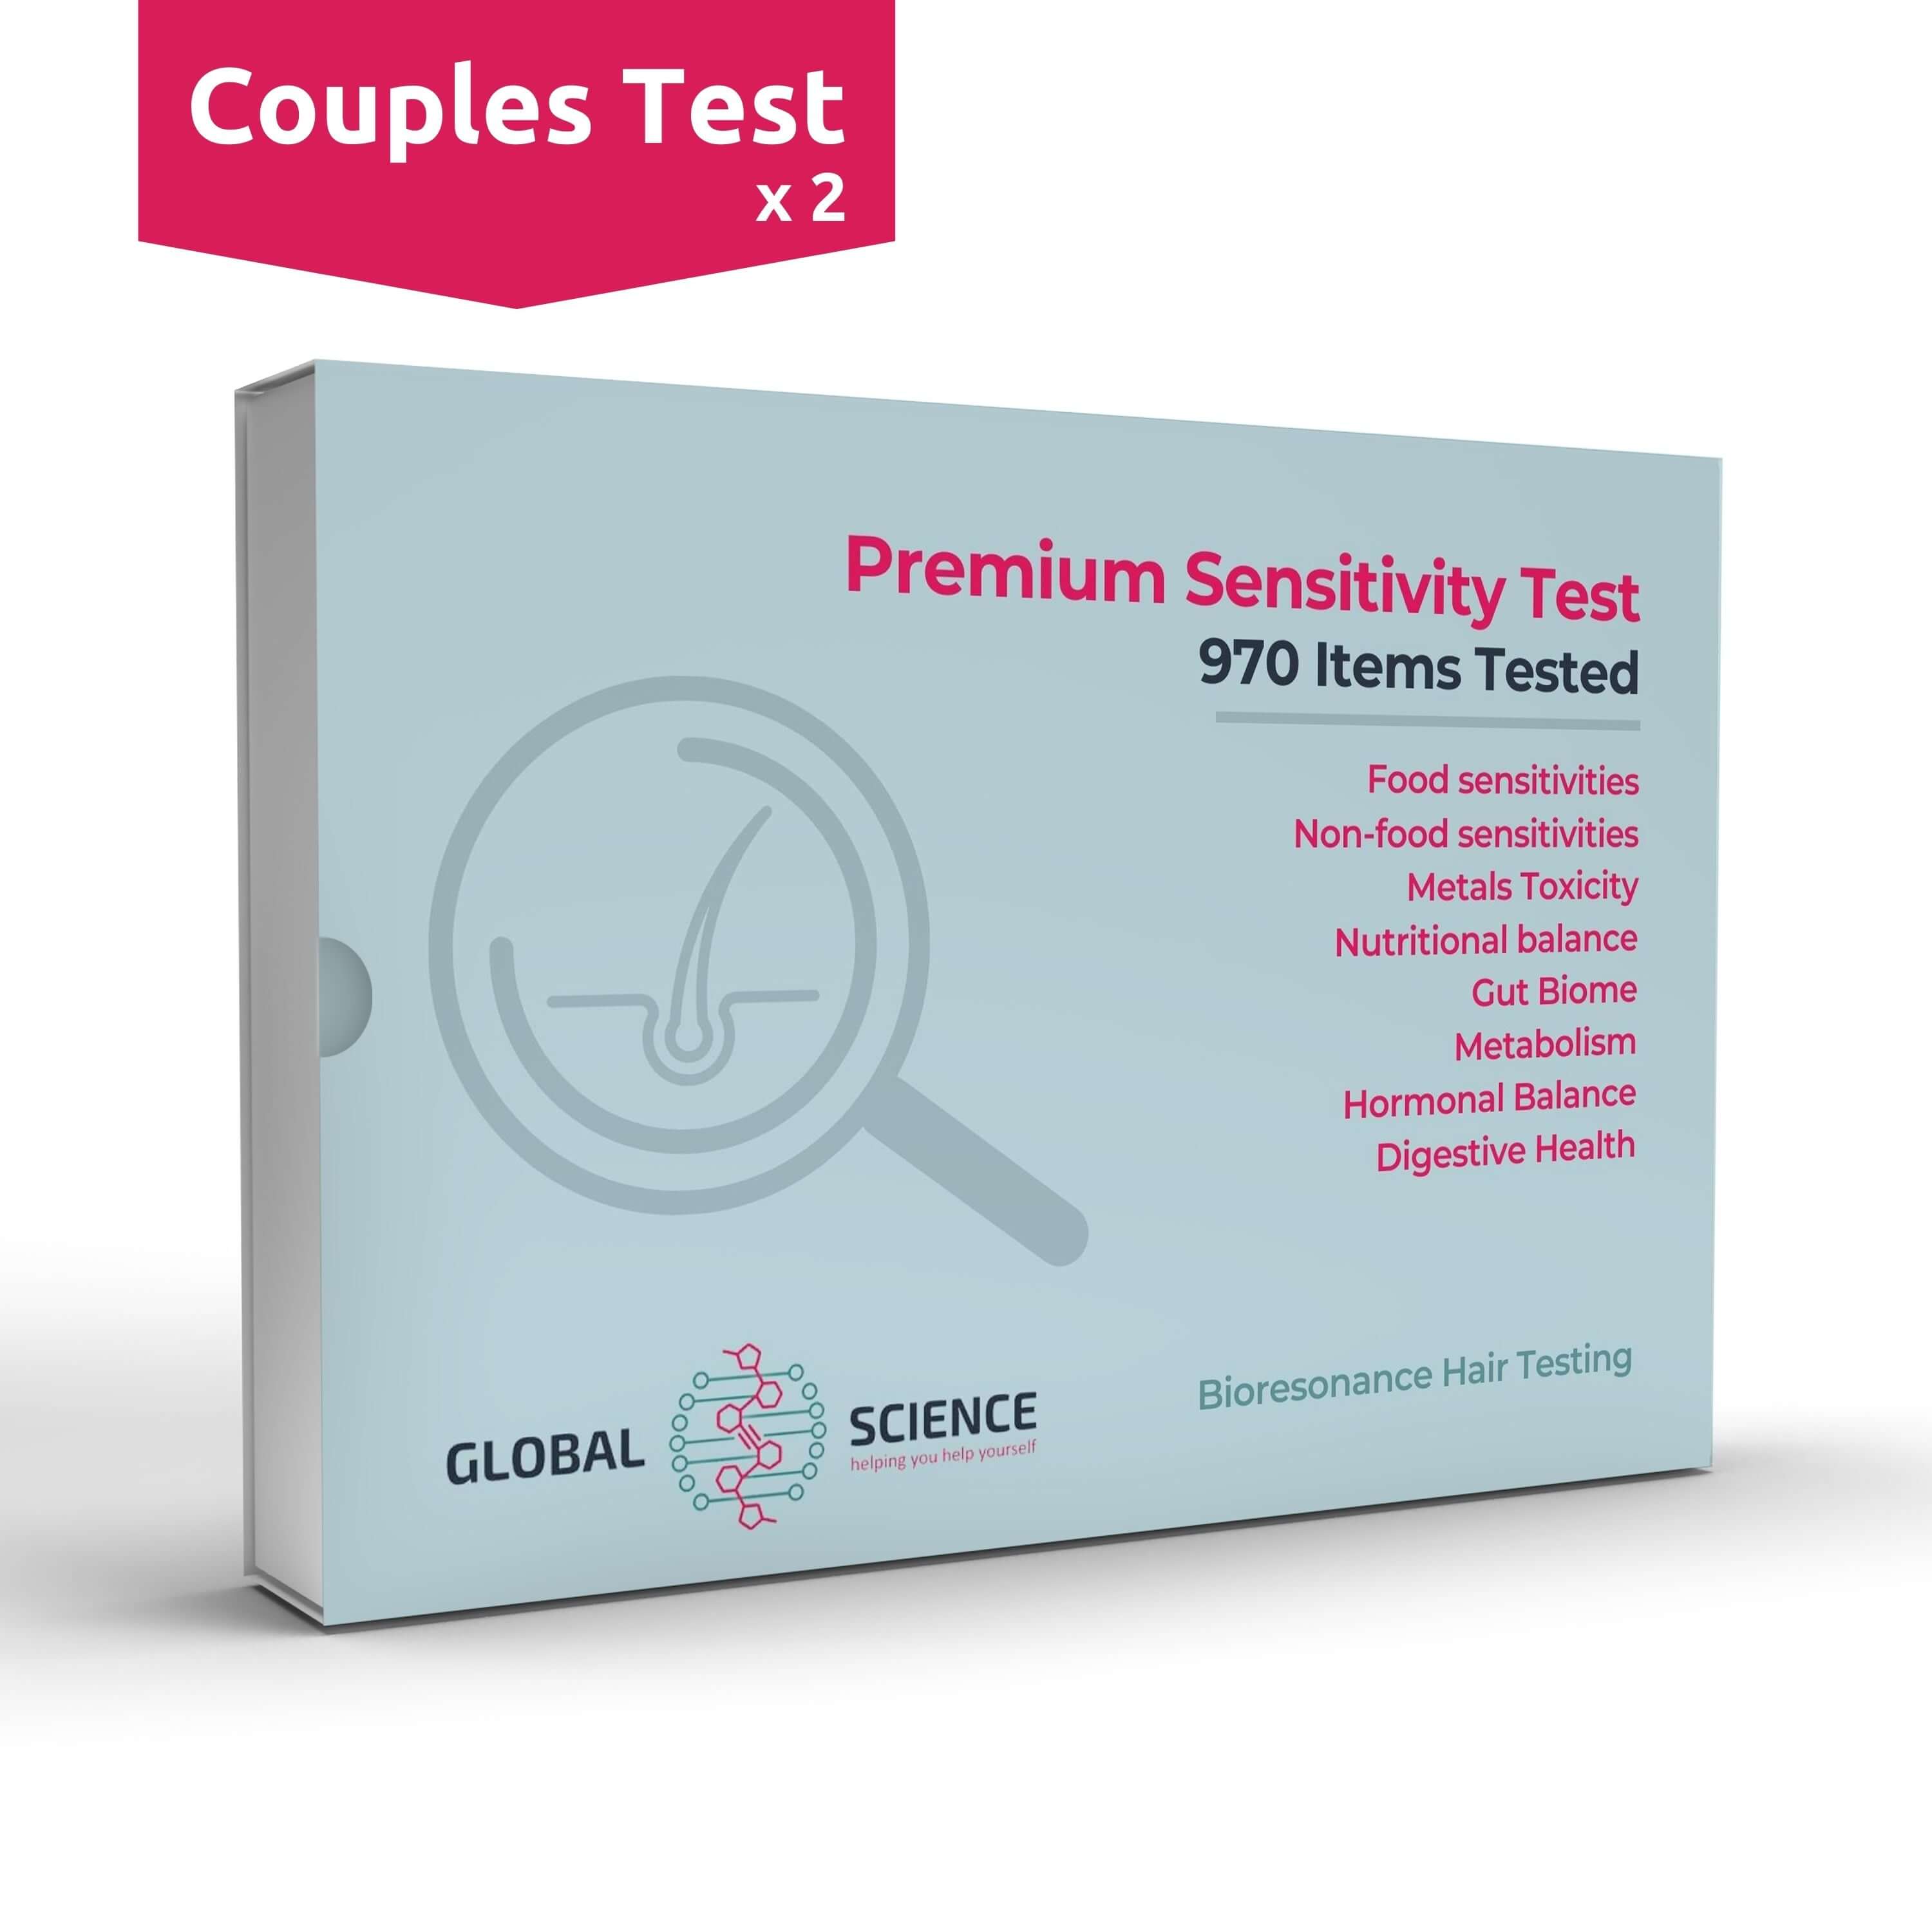 Premium Sensitivity 970 Mock Up Kit Couples - Allergy, Intolerance and Bioresonance Testing Labs